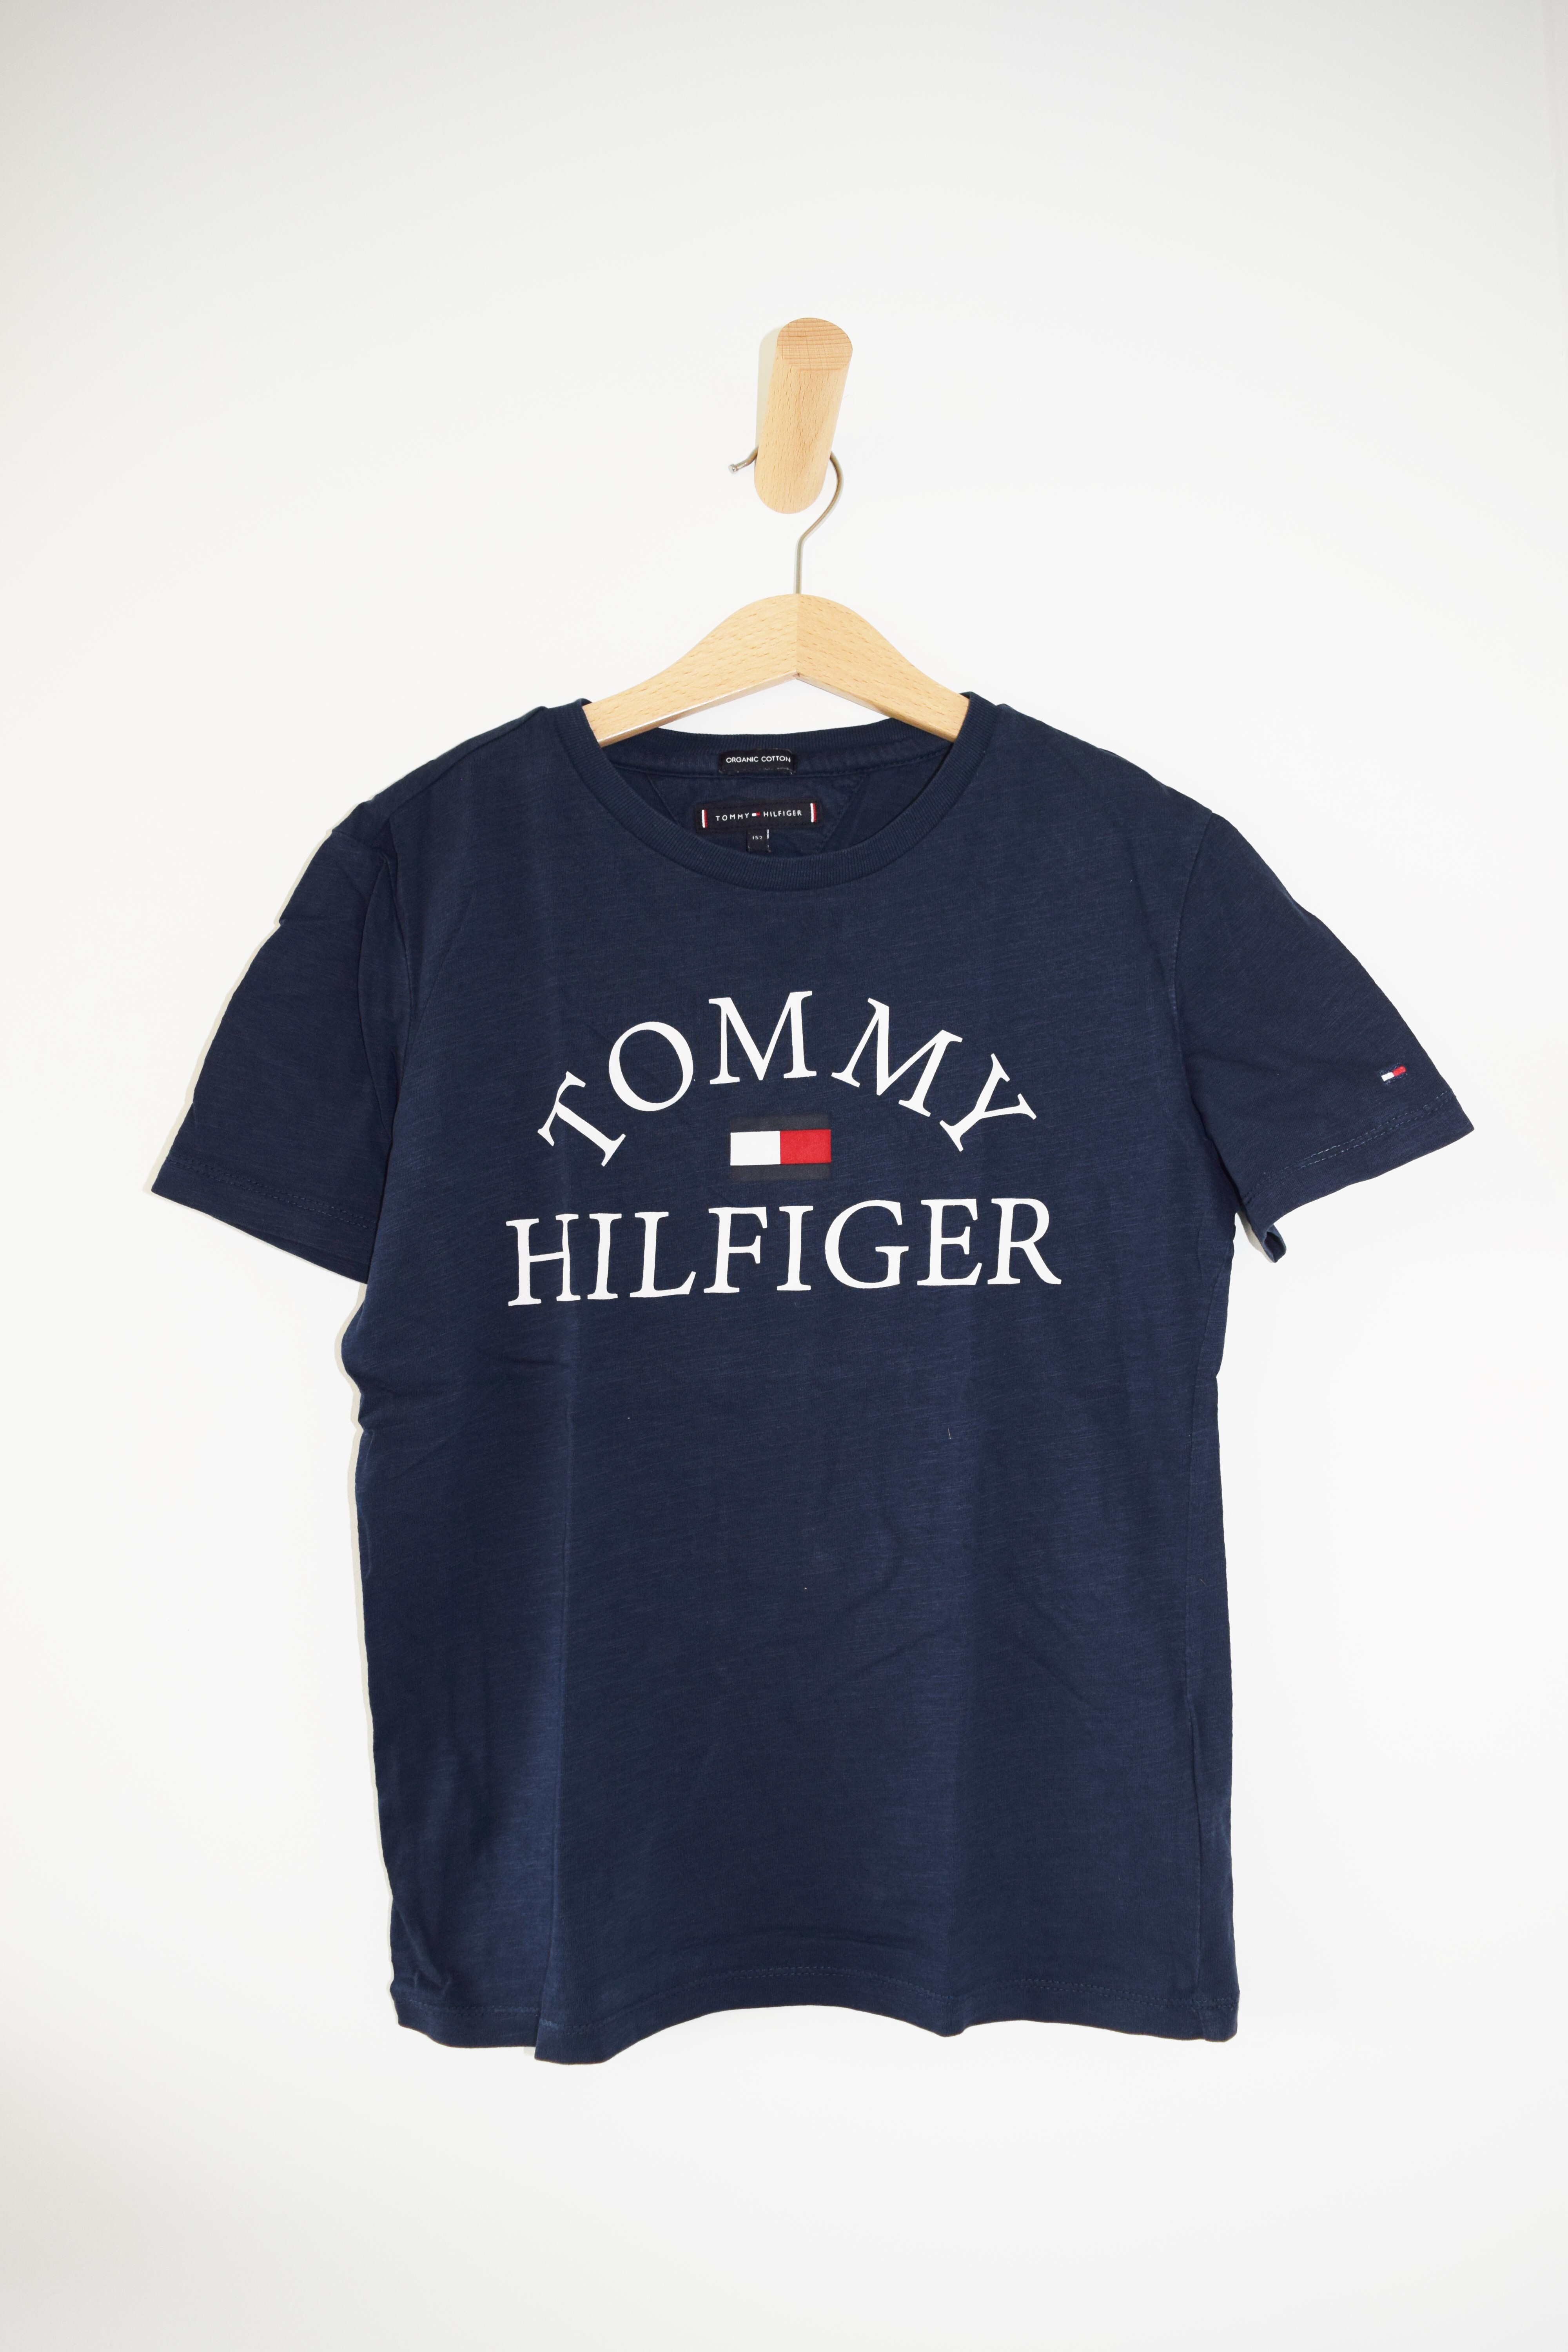 T-shirt, Tommy Hilfiger, 12 jaar 